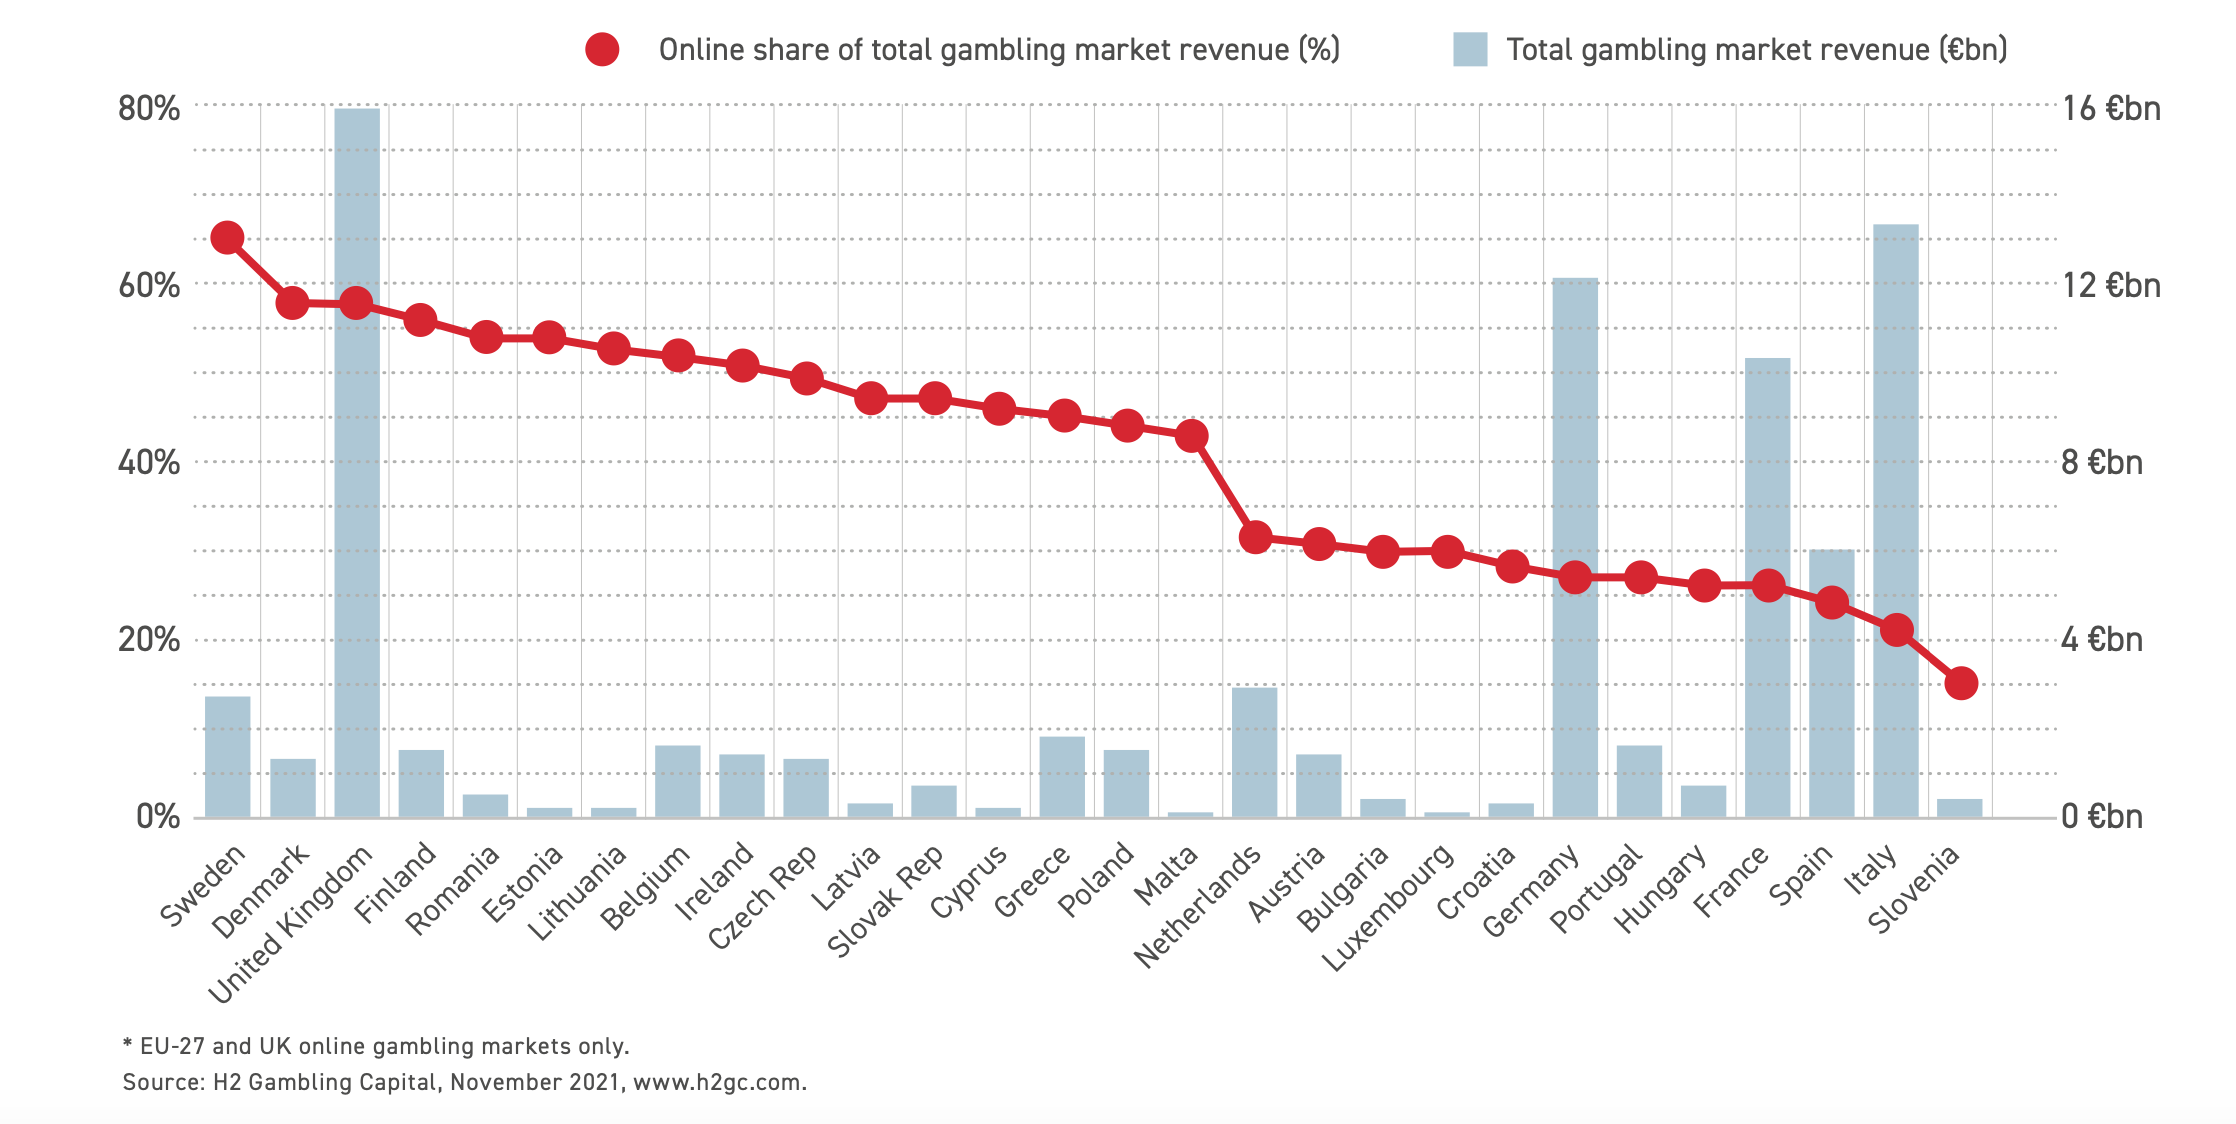 Online gambling shares of national gambling markets in Europe